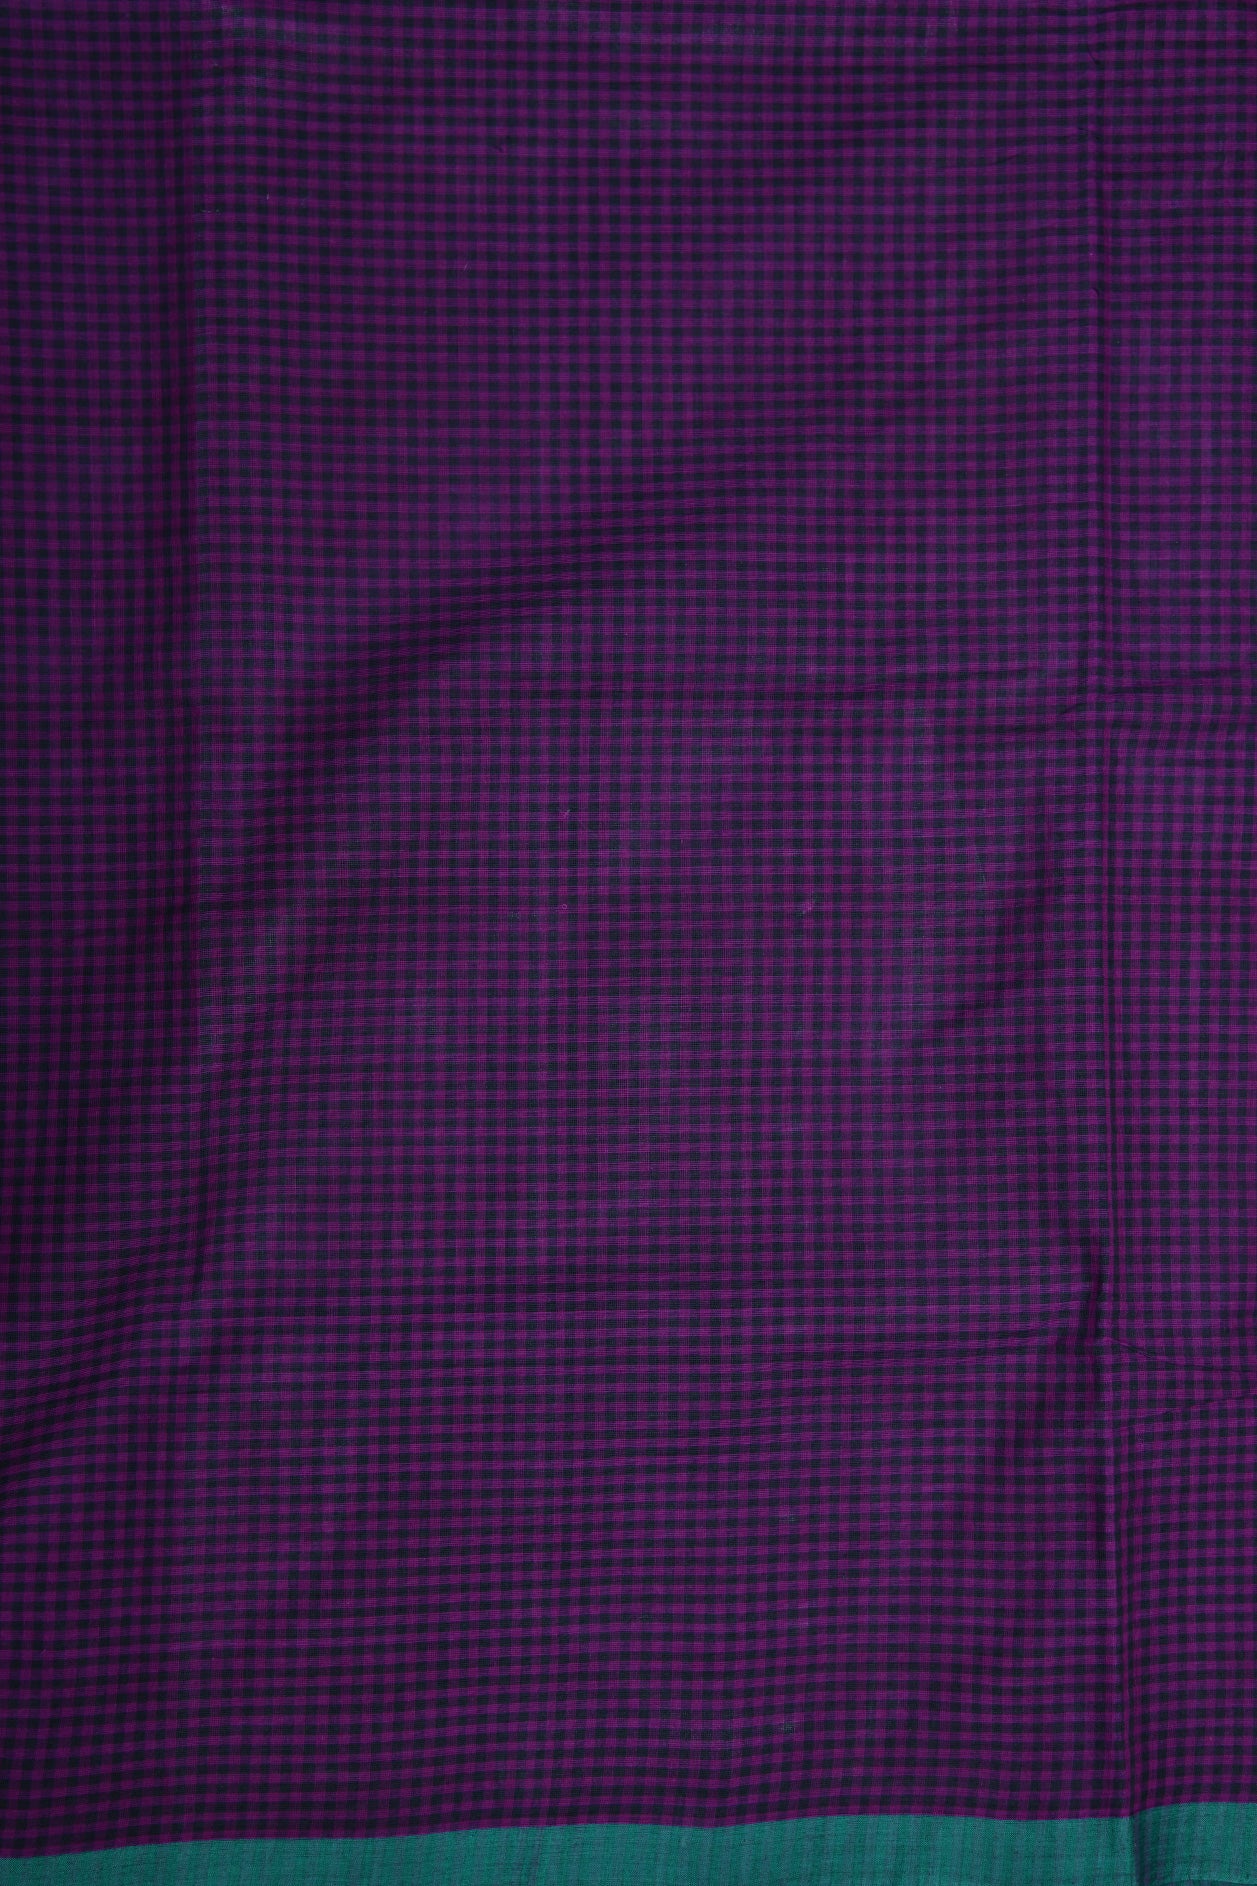 Small Checks Deep Purple Coimbatore Cotton Saree